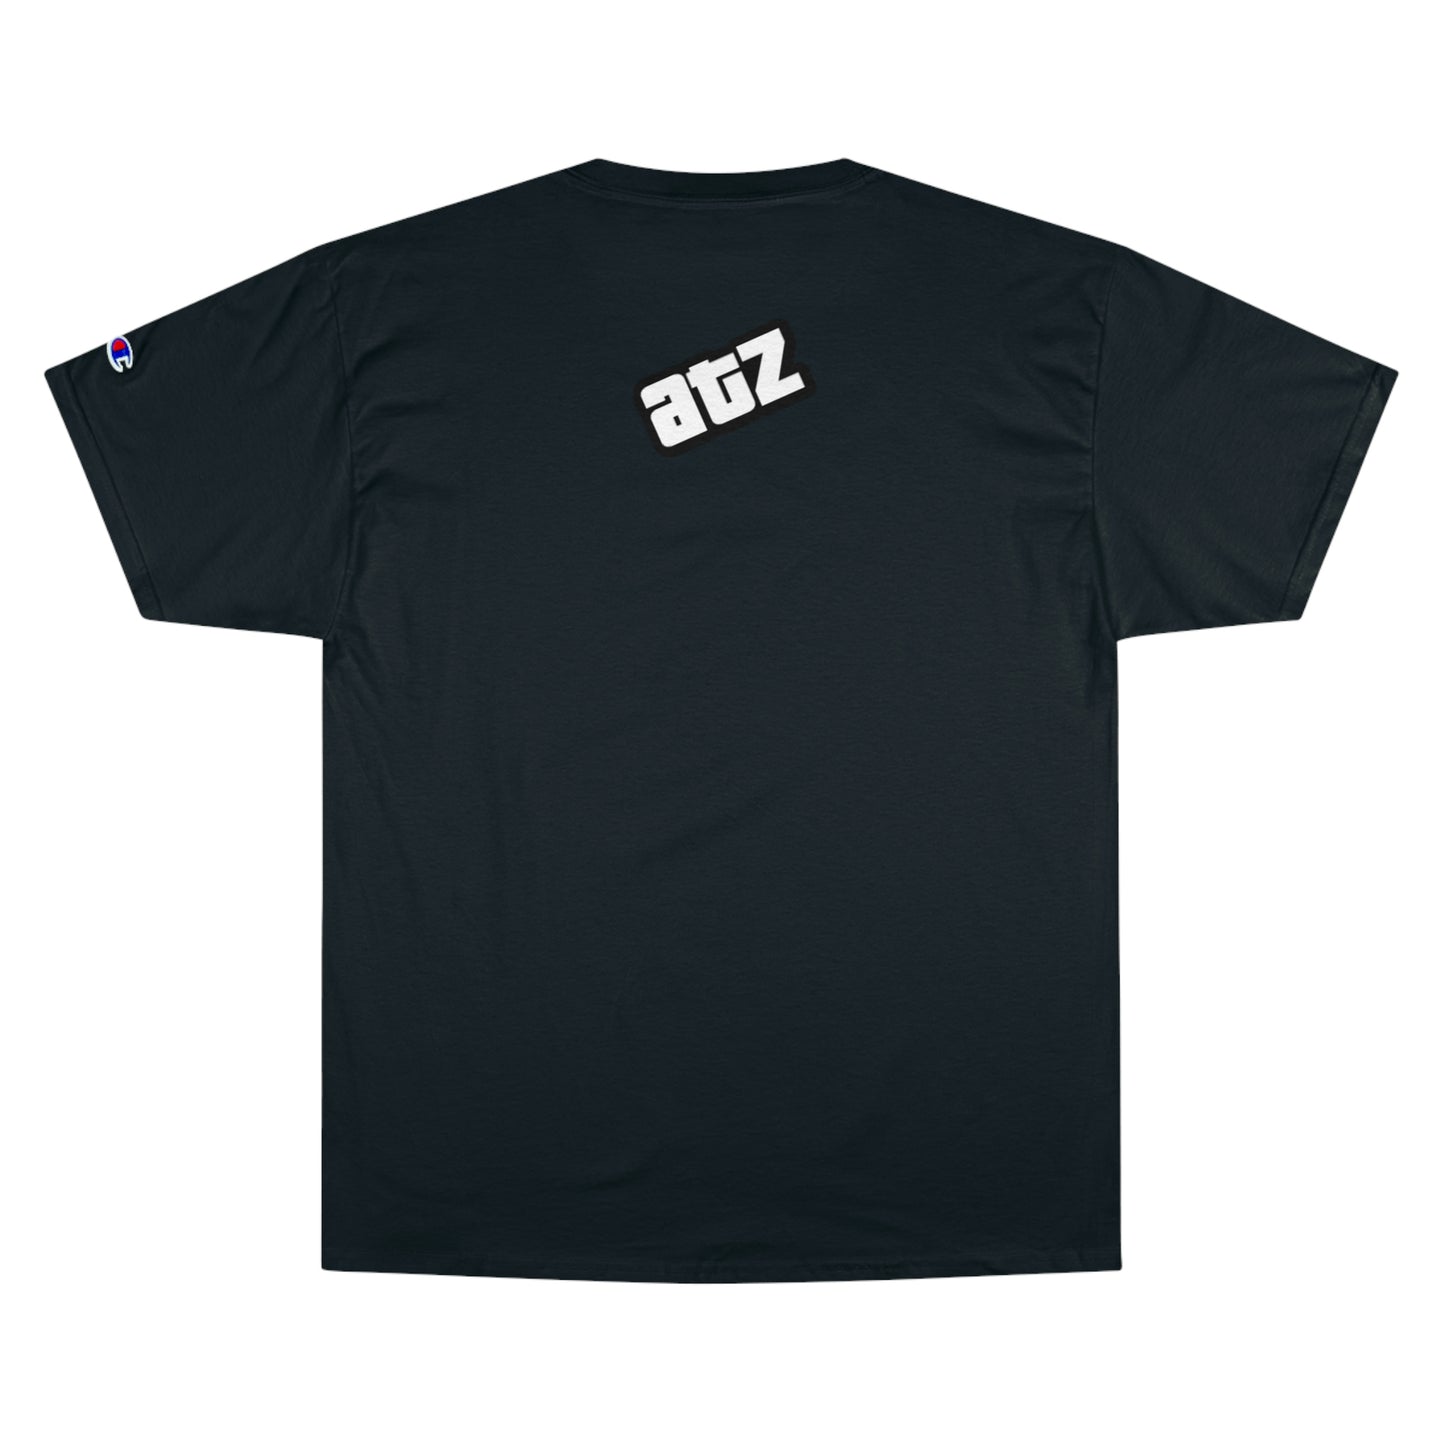 Atziluth Gallery x Champion "Grand Theft Art" T-Shirt